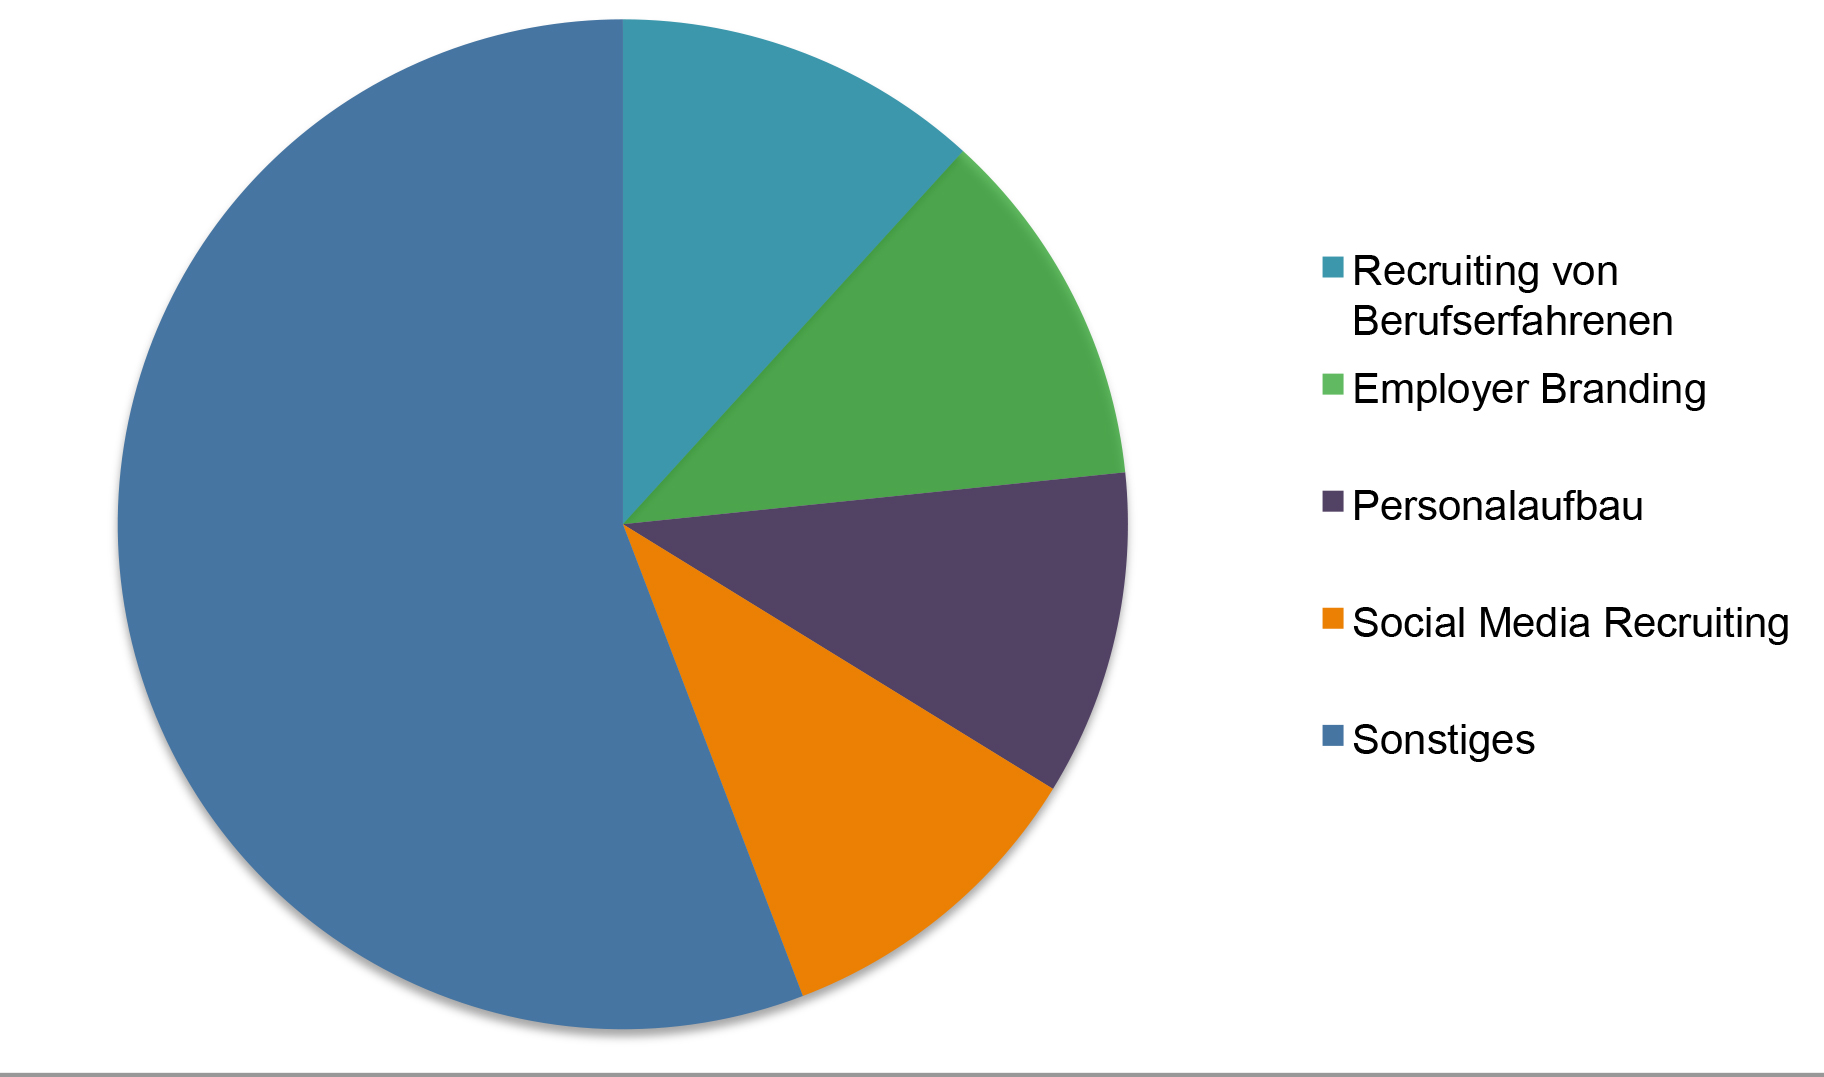 Quelle: “ICR Social Media Recruiting Report 2012” via ICR. 